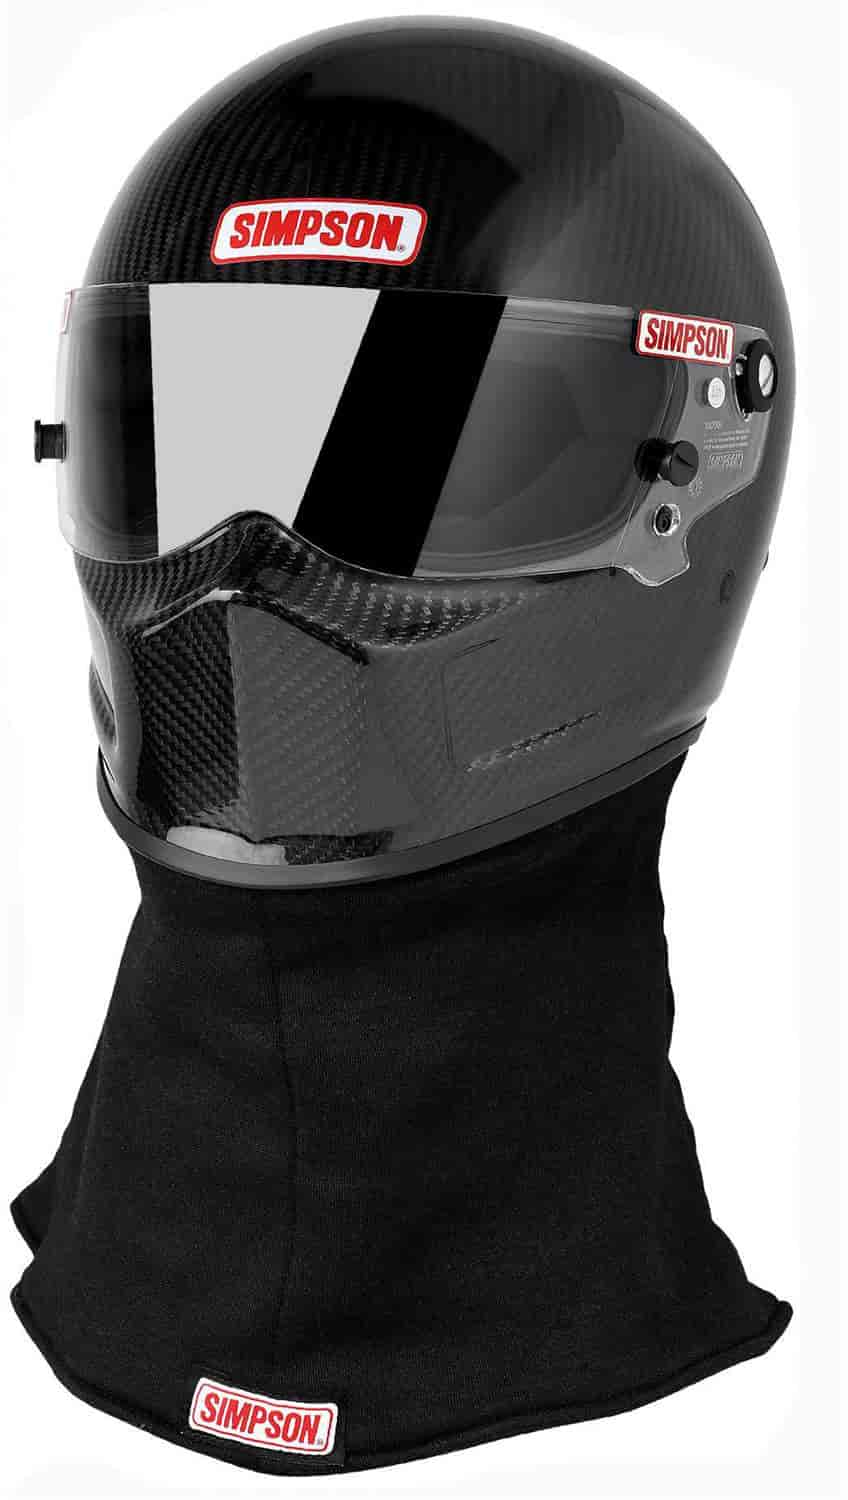 Drag Bandit Racing Helmet SA2020 Certified